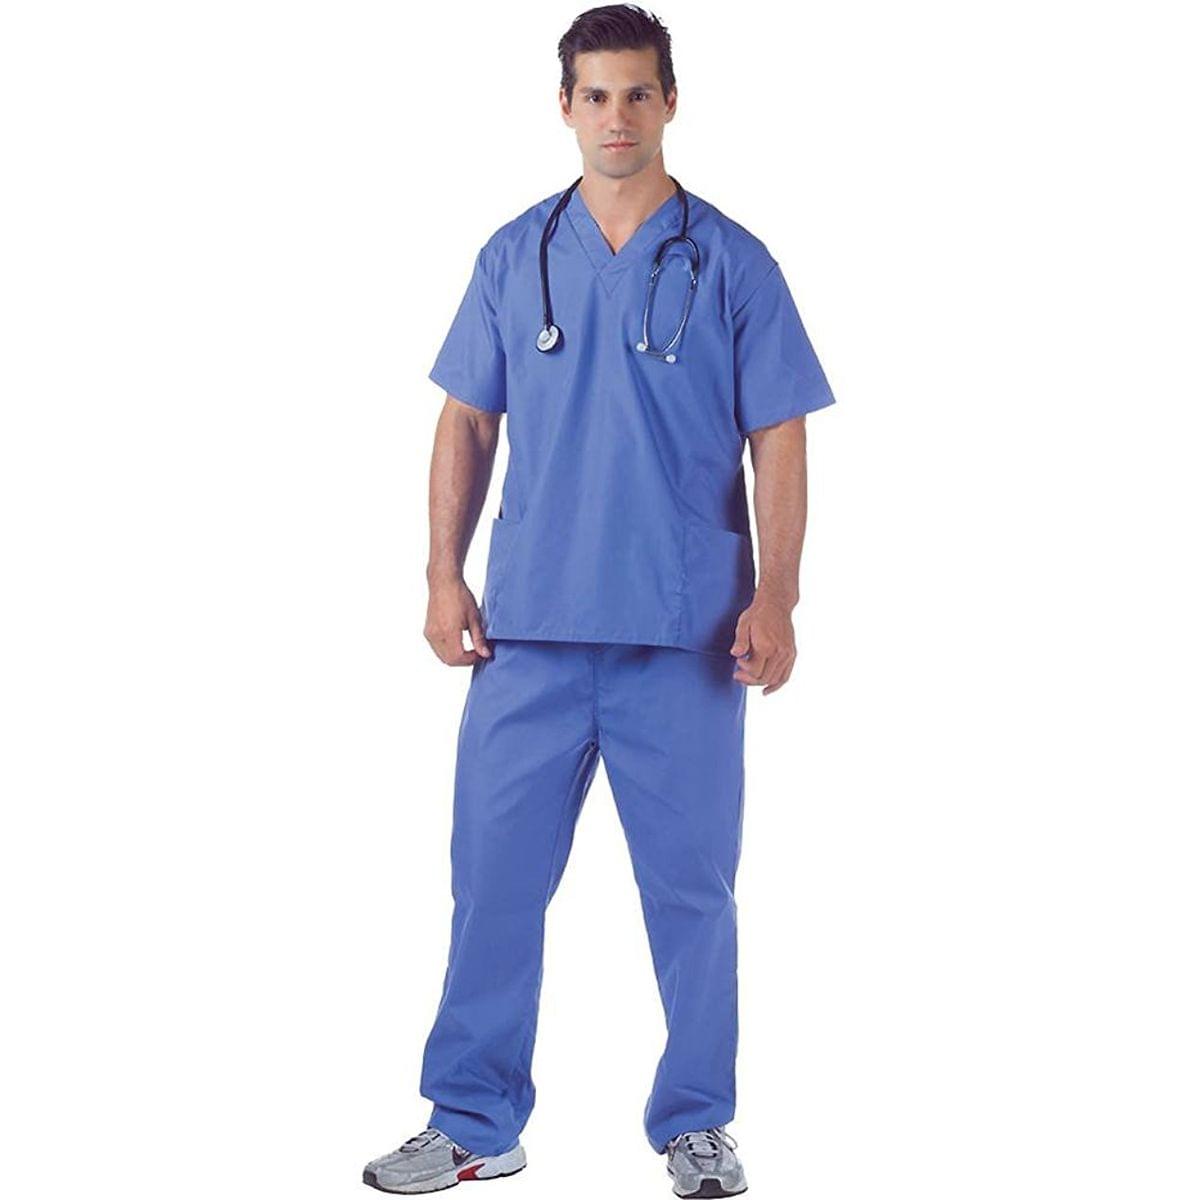 Blue Hospital Scrubs Adult Costume